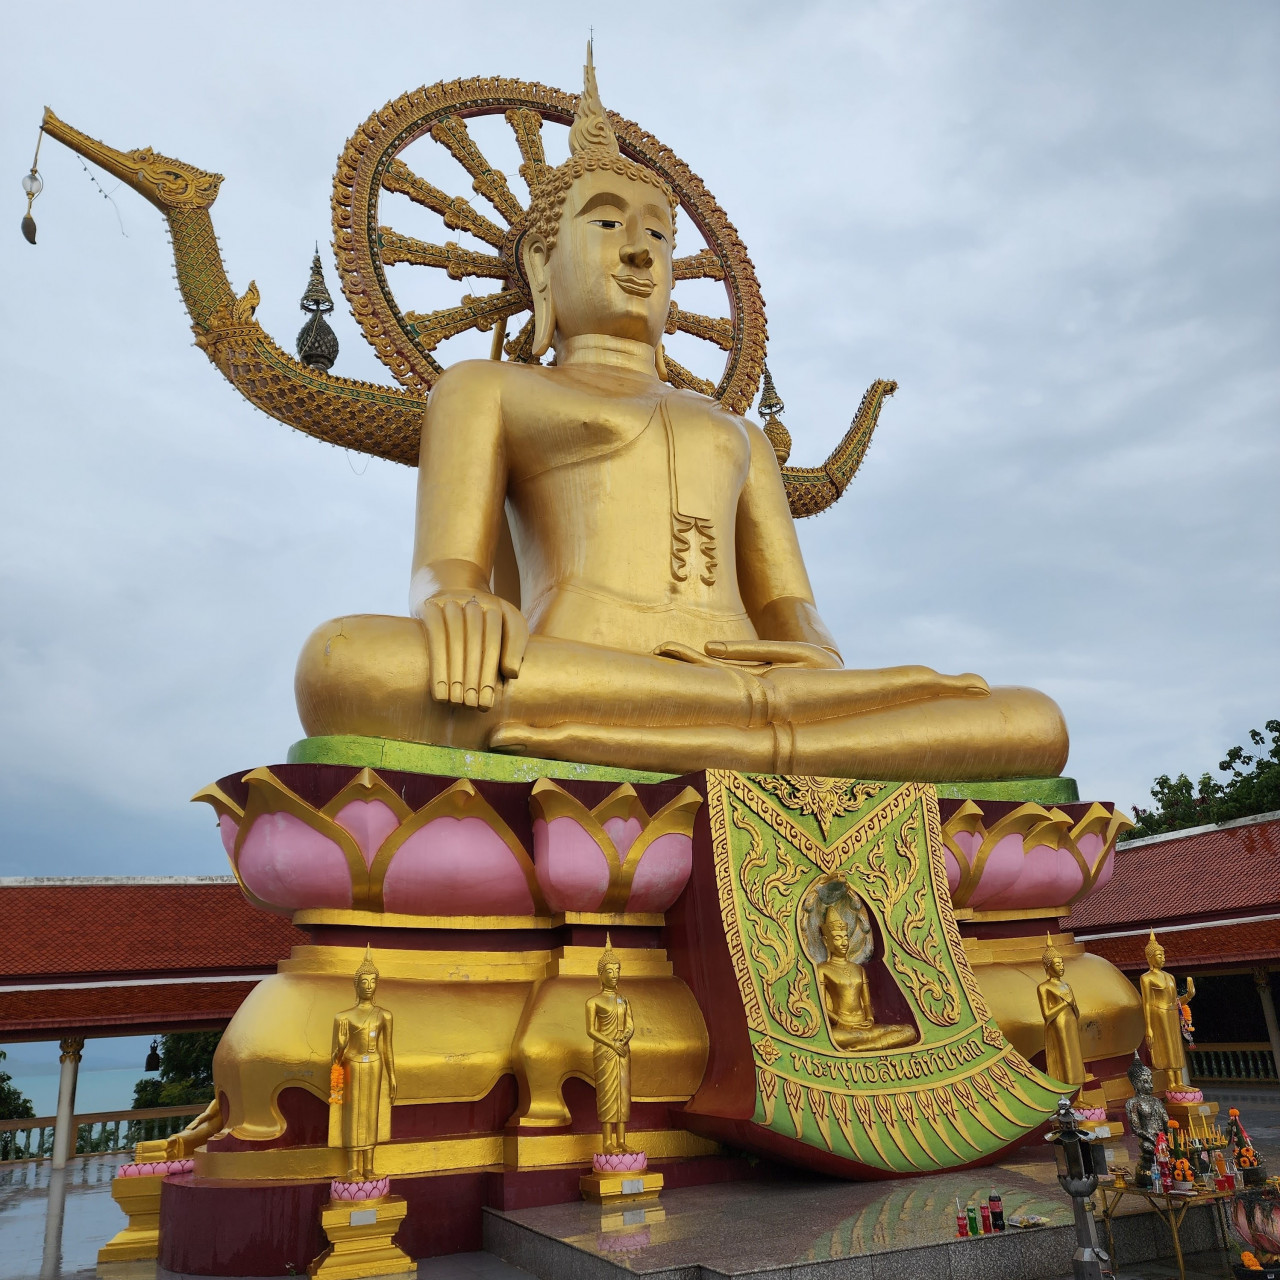 The Giant Buddha at Wat Phra Yai. – Pic by Shah Shamshiri